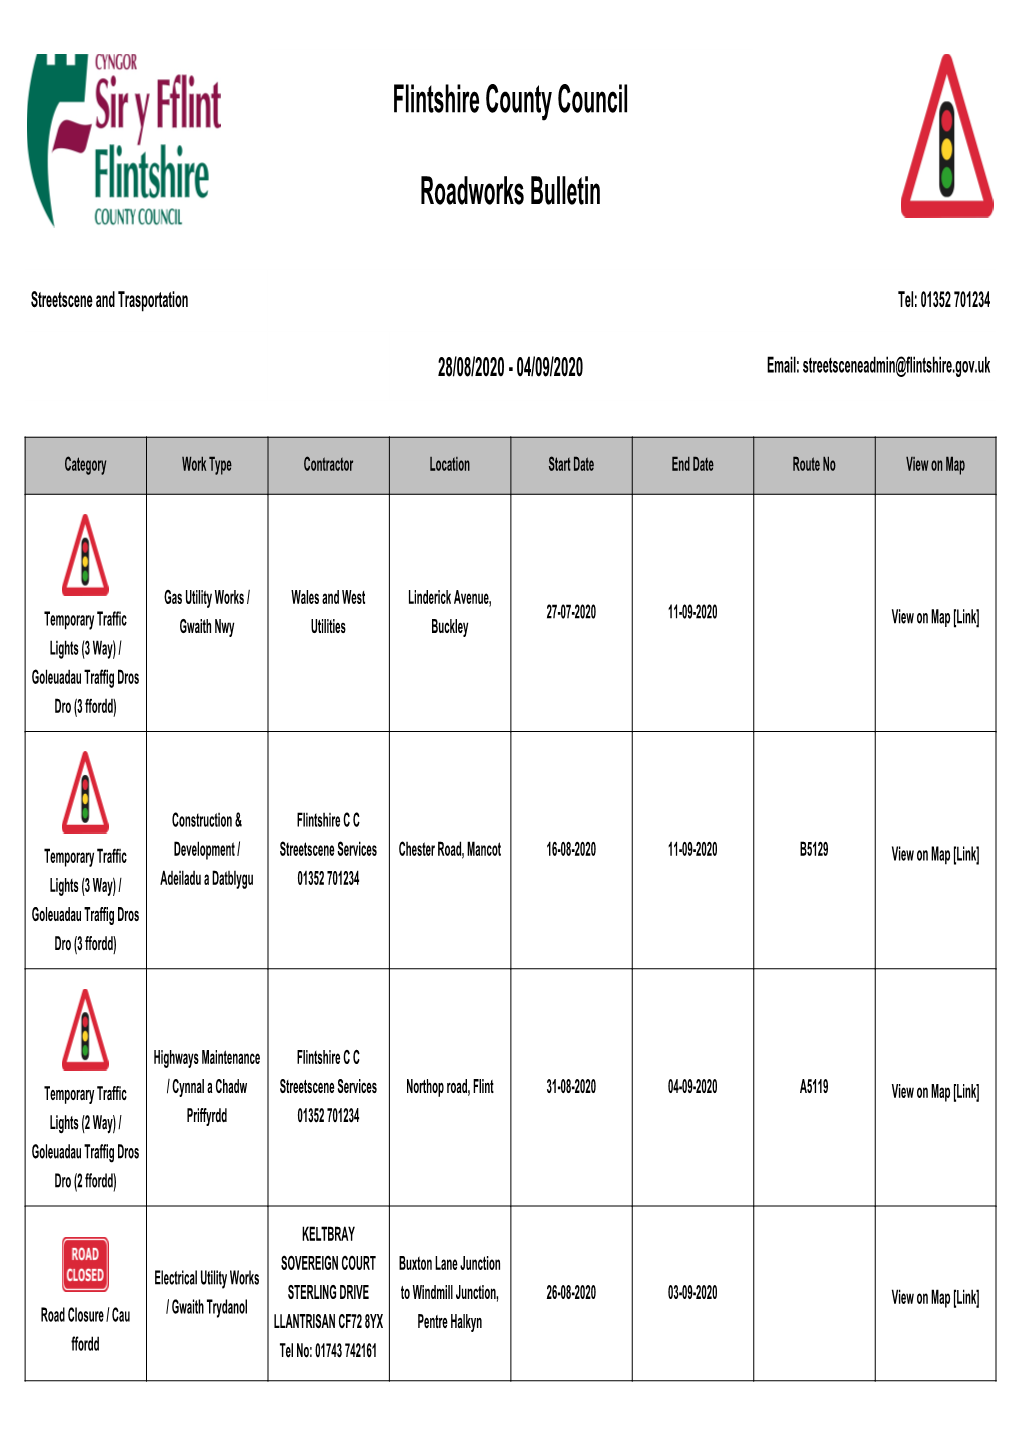 Flintshire County Council Roadworks Bulletin